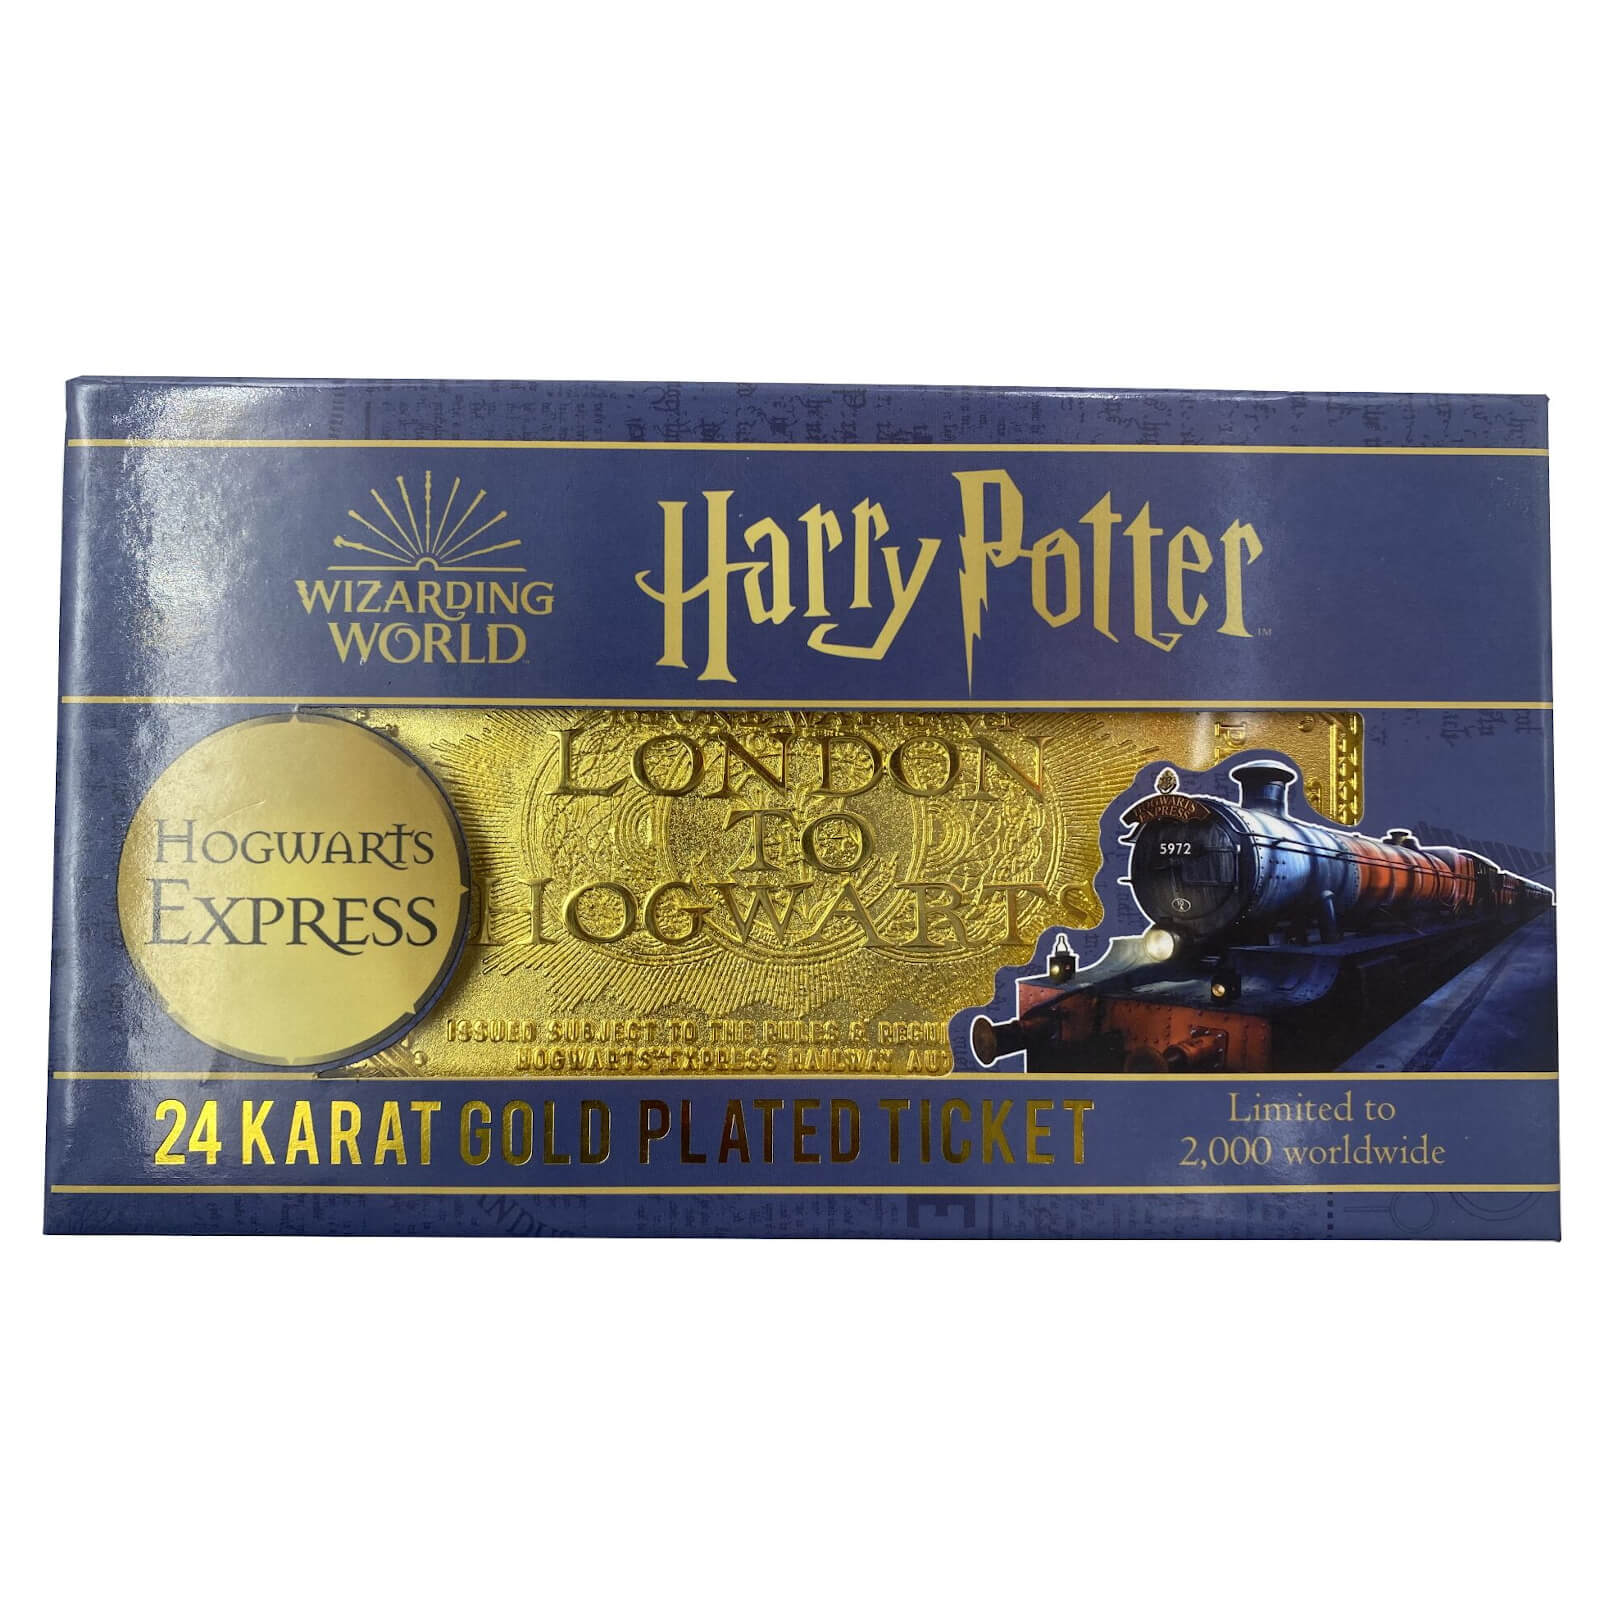 Harry Potter 24k Gold Plated Hogwarts Express Ticket Limited Edition Replica Zavvi Exclusive Merchandise Zavvi Uk